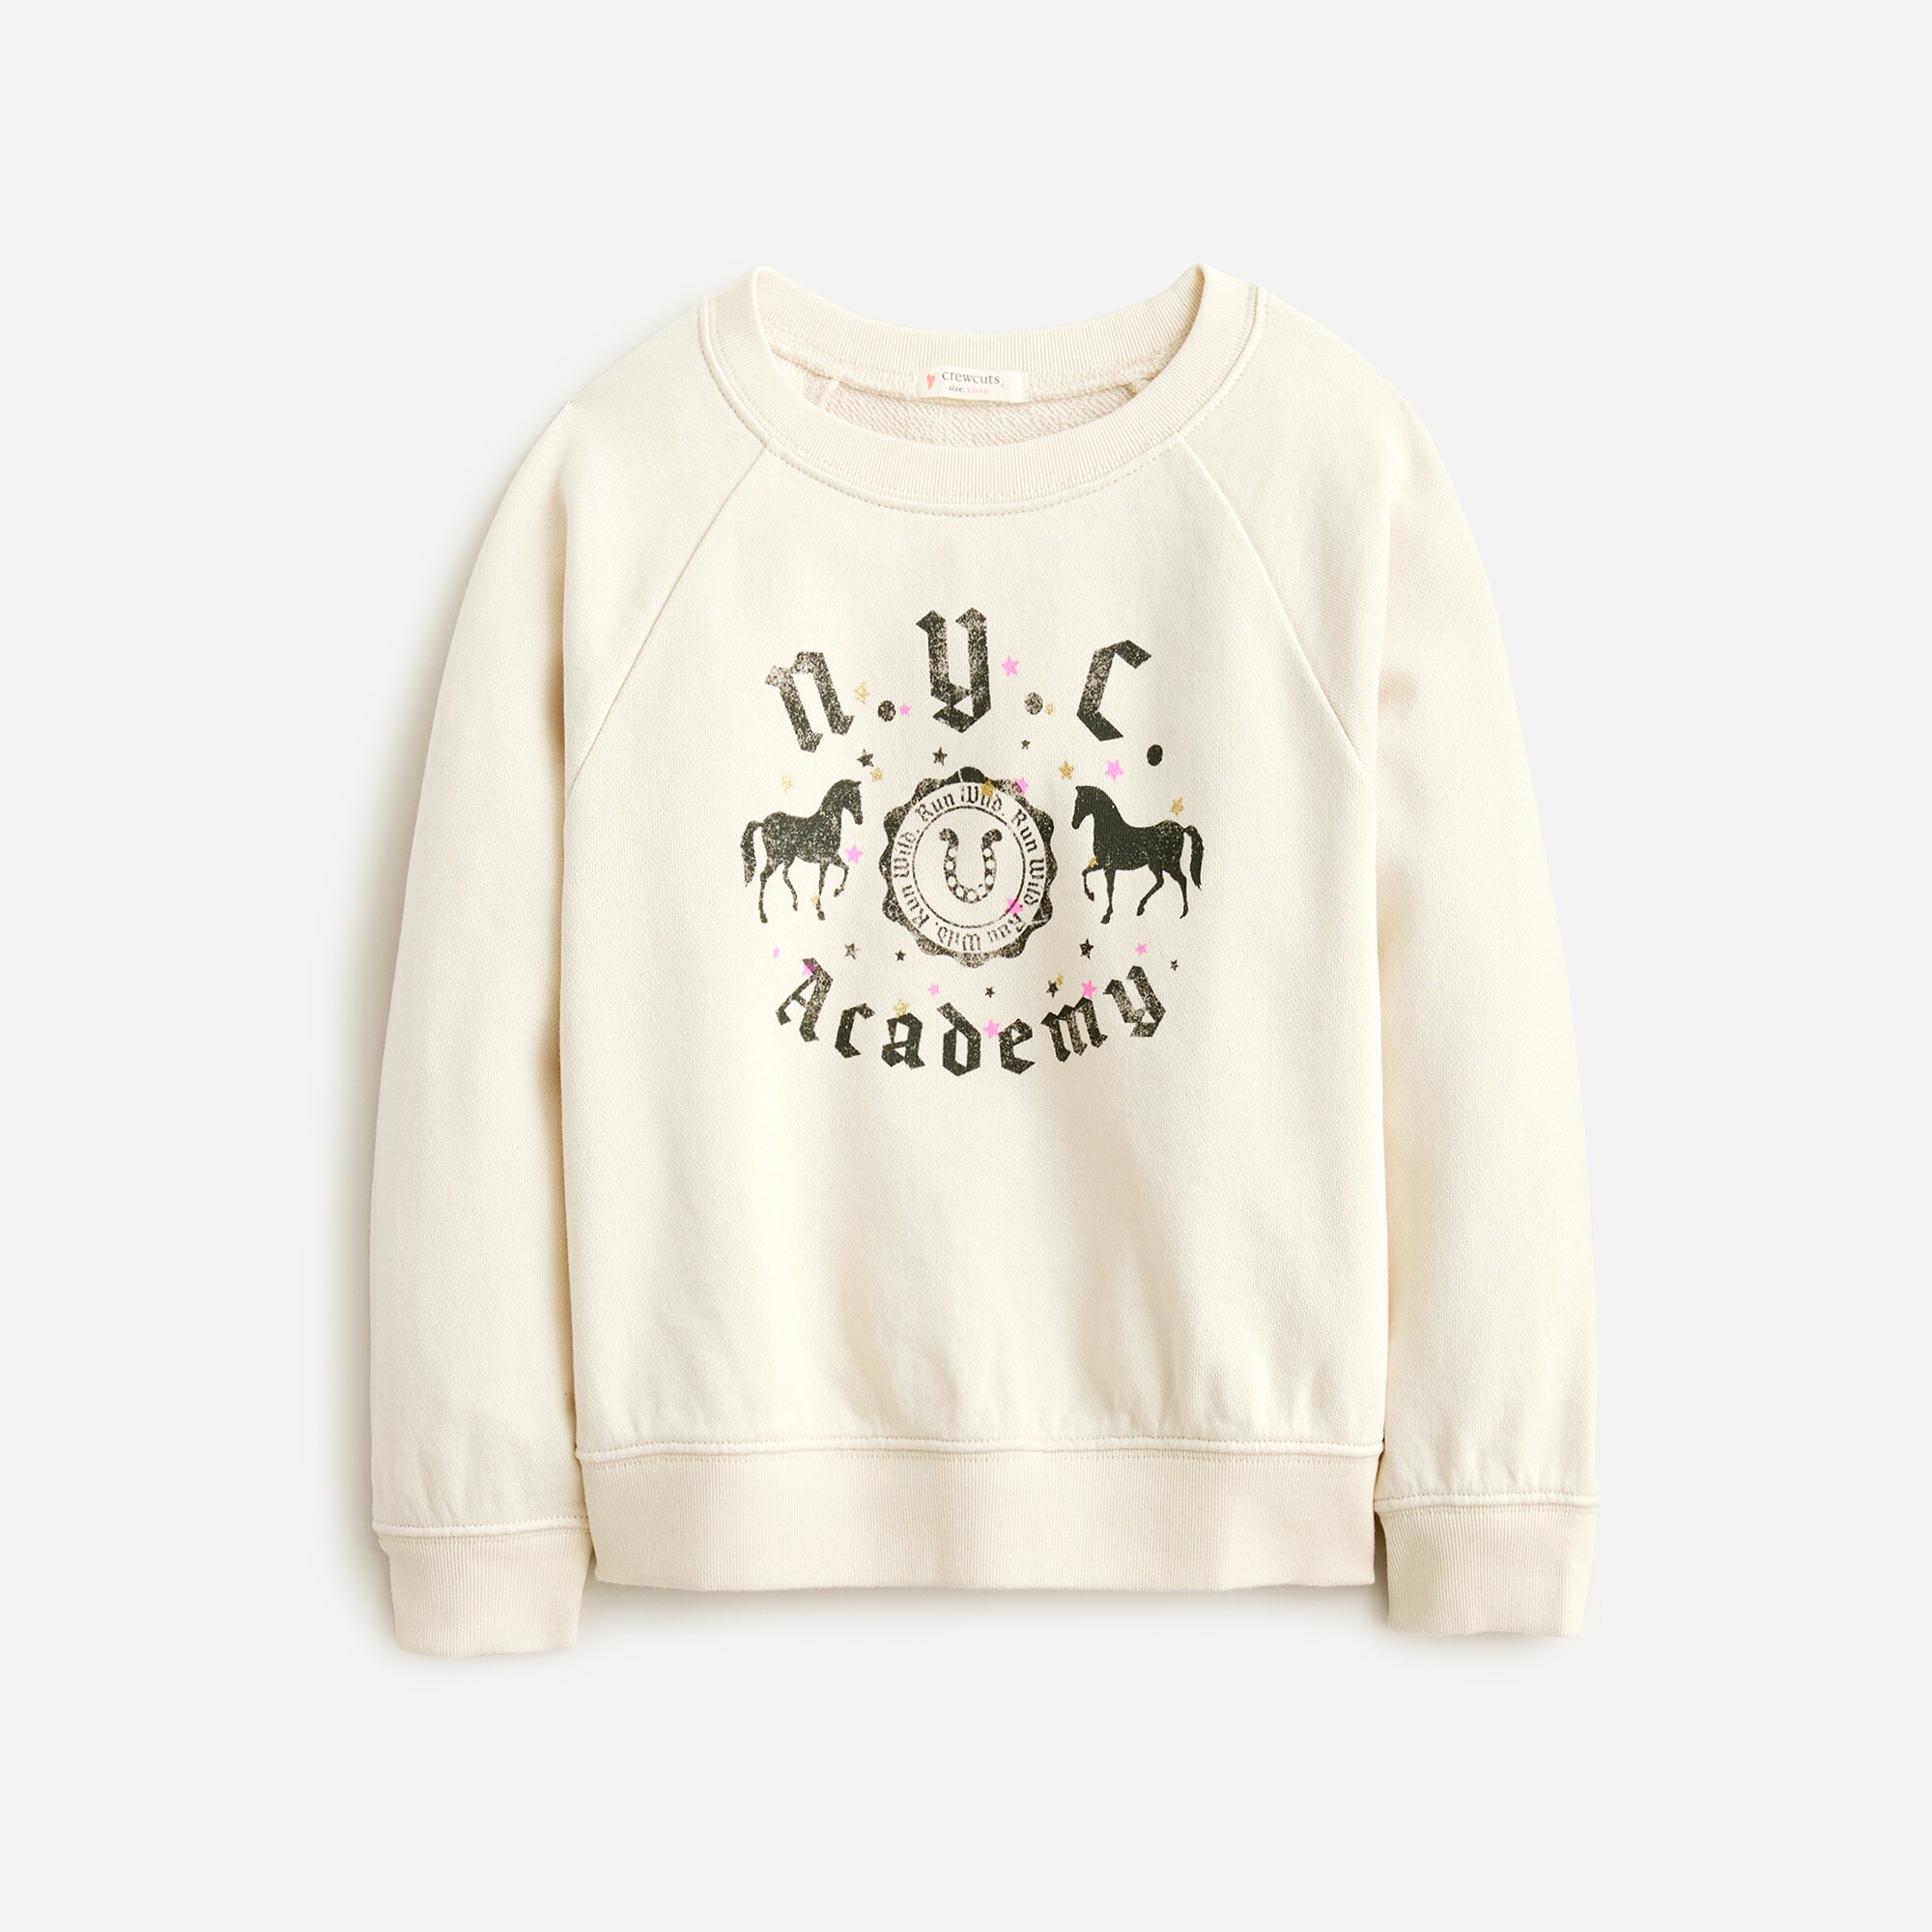  Girls' academy graphic crewneck sweatshirt